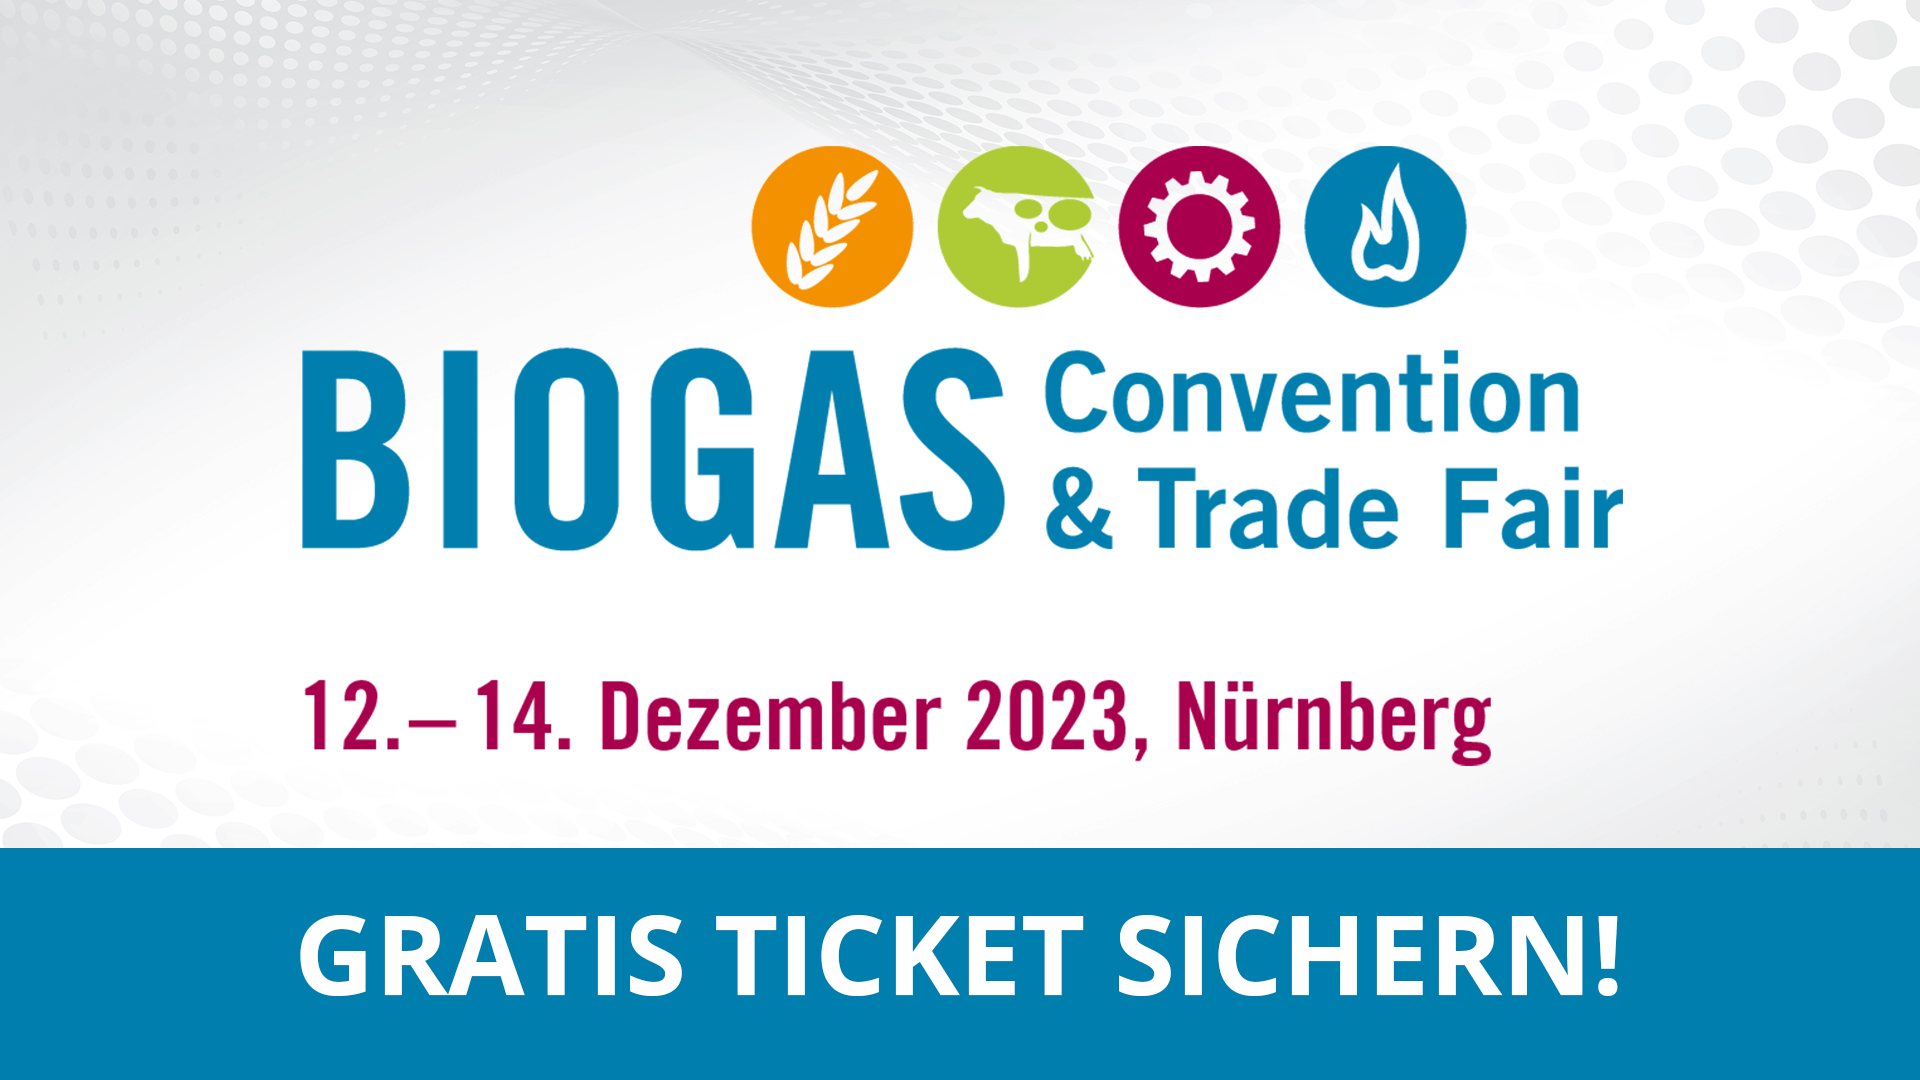 Biogas Convention 2023